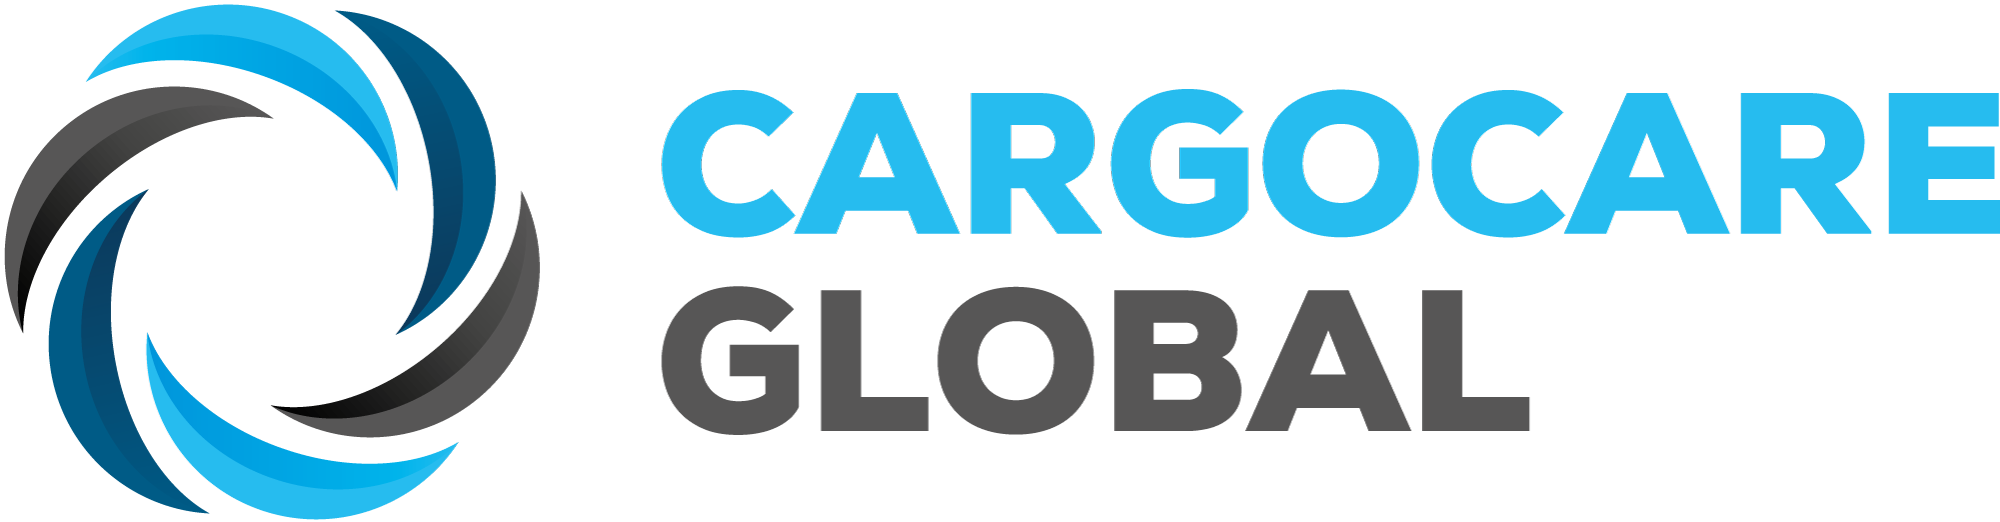 Cargocare Global